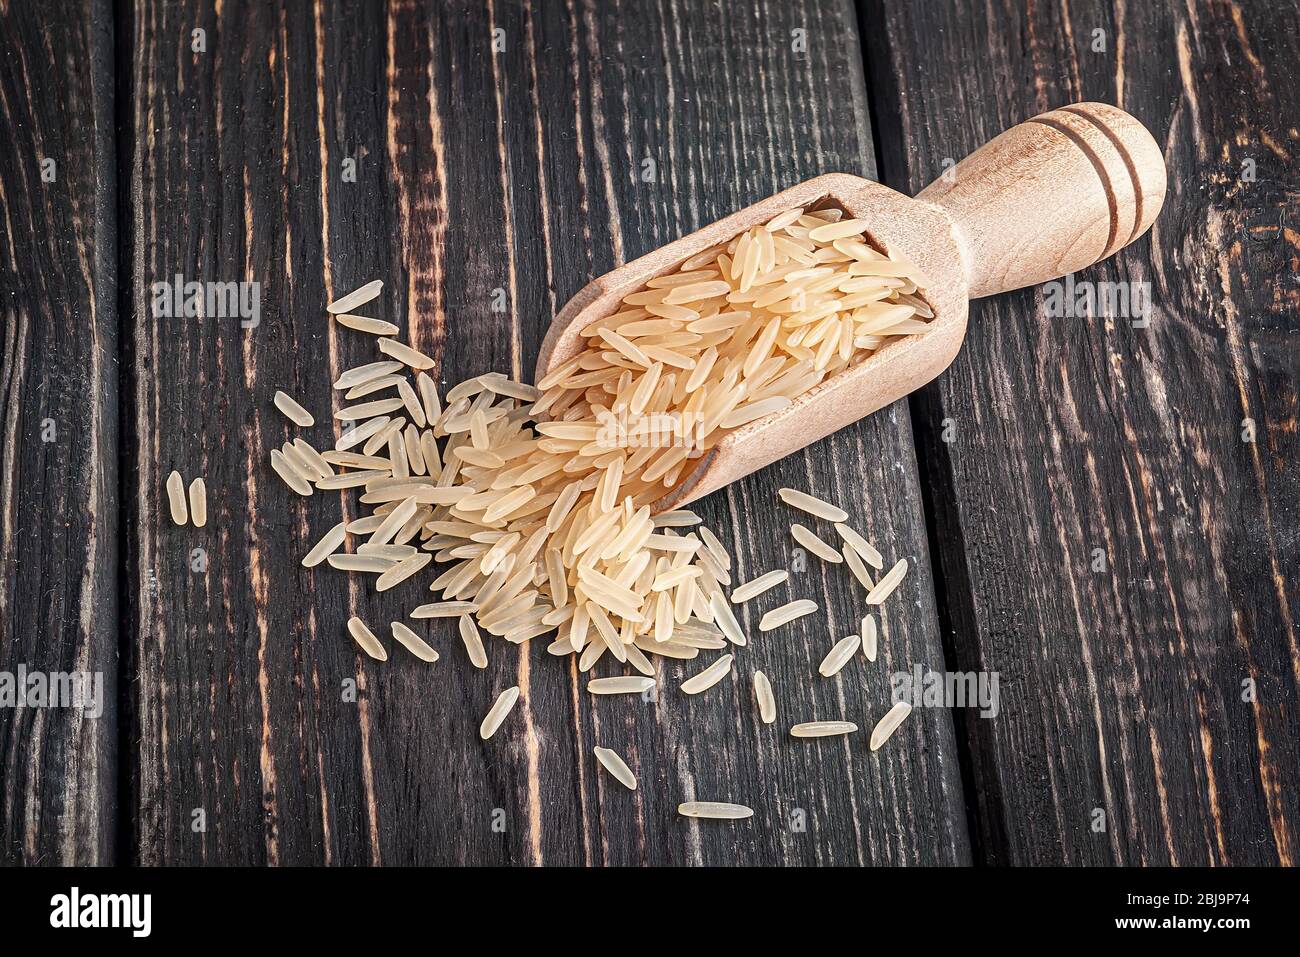 Long rice in wooden scoop Stock Photo